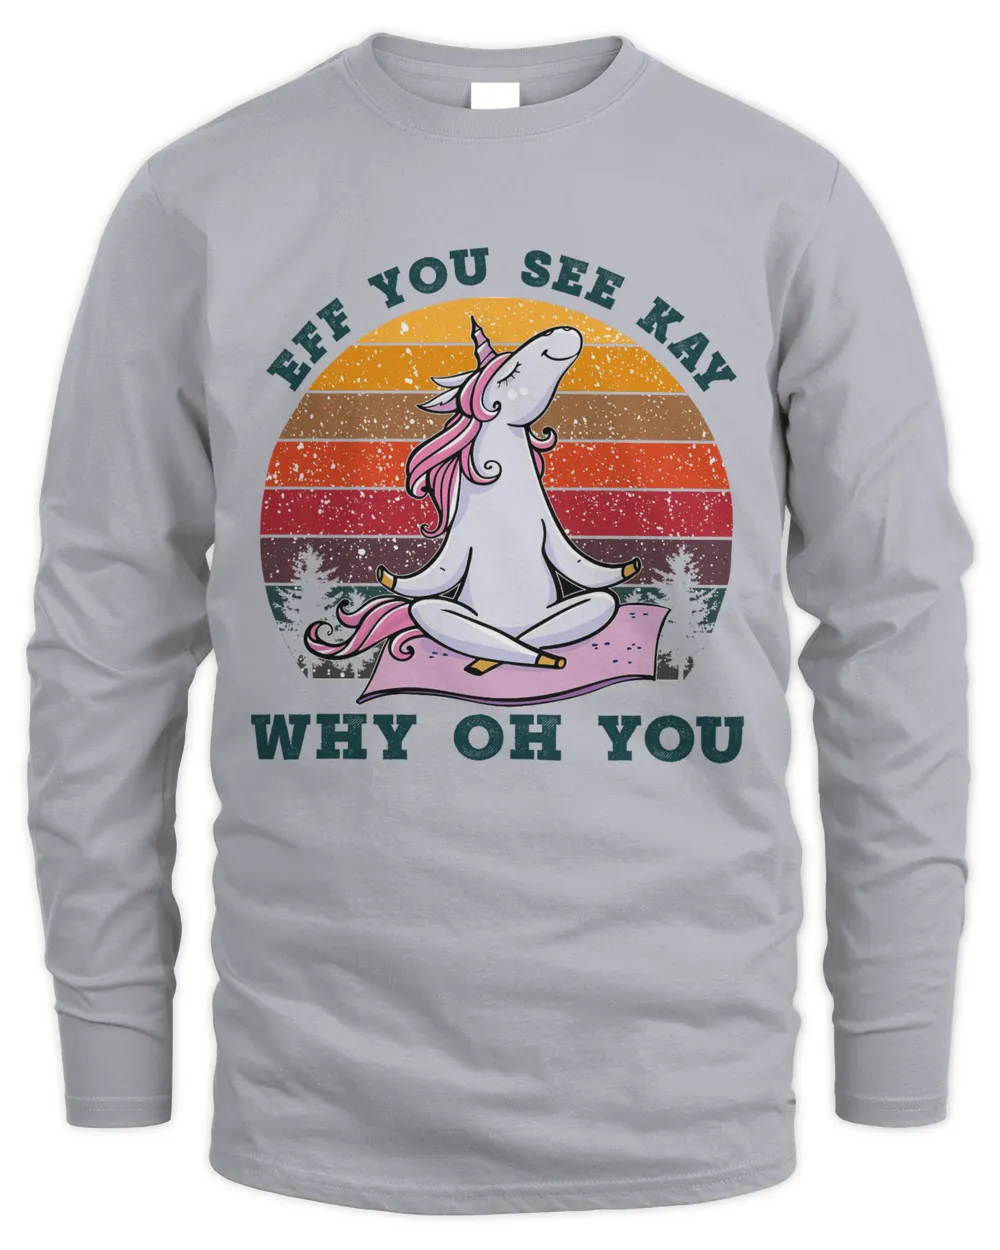 Unicorn Tshirt Hoodie Sweatshirt Eff You See Kay Why Oh You For Men, For Women